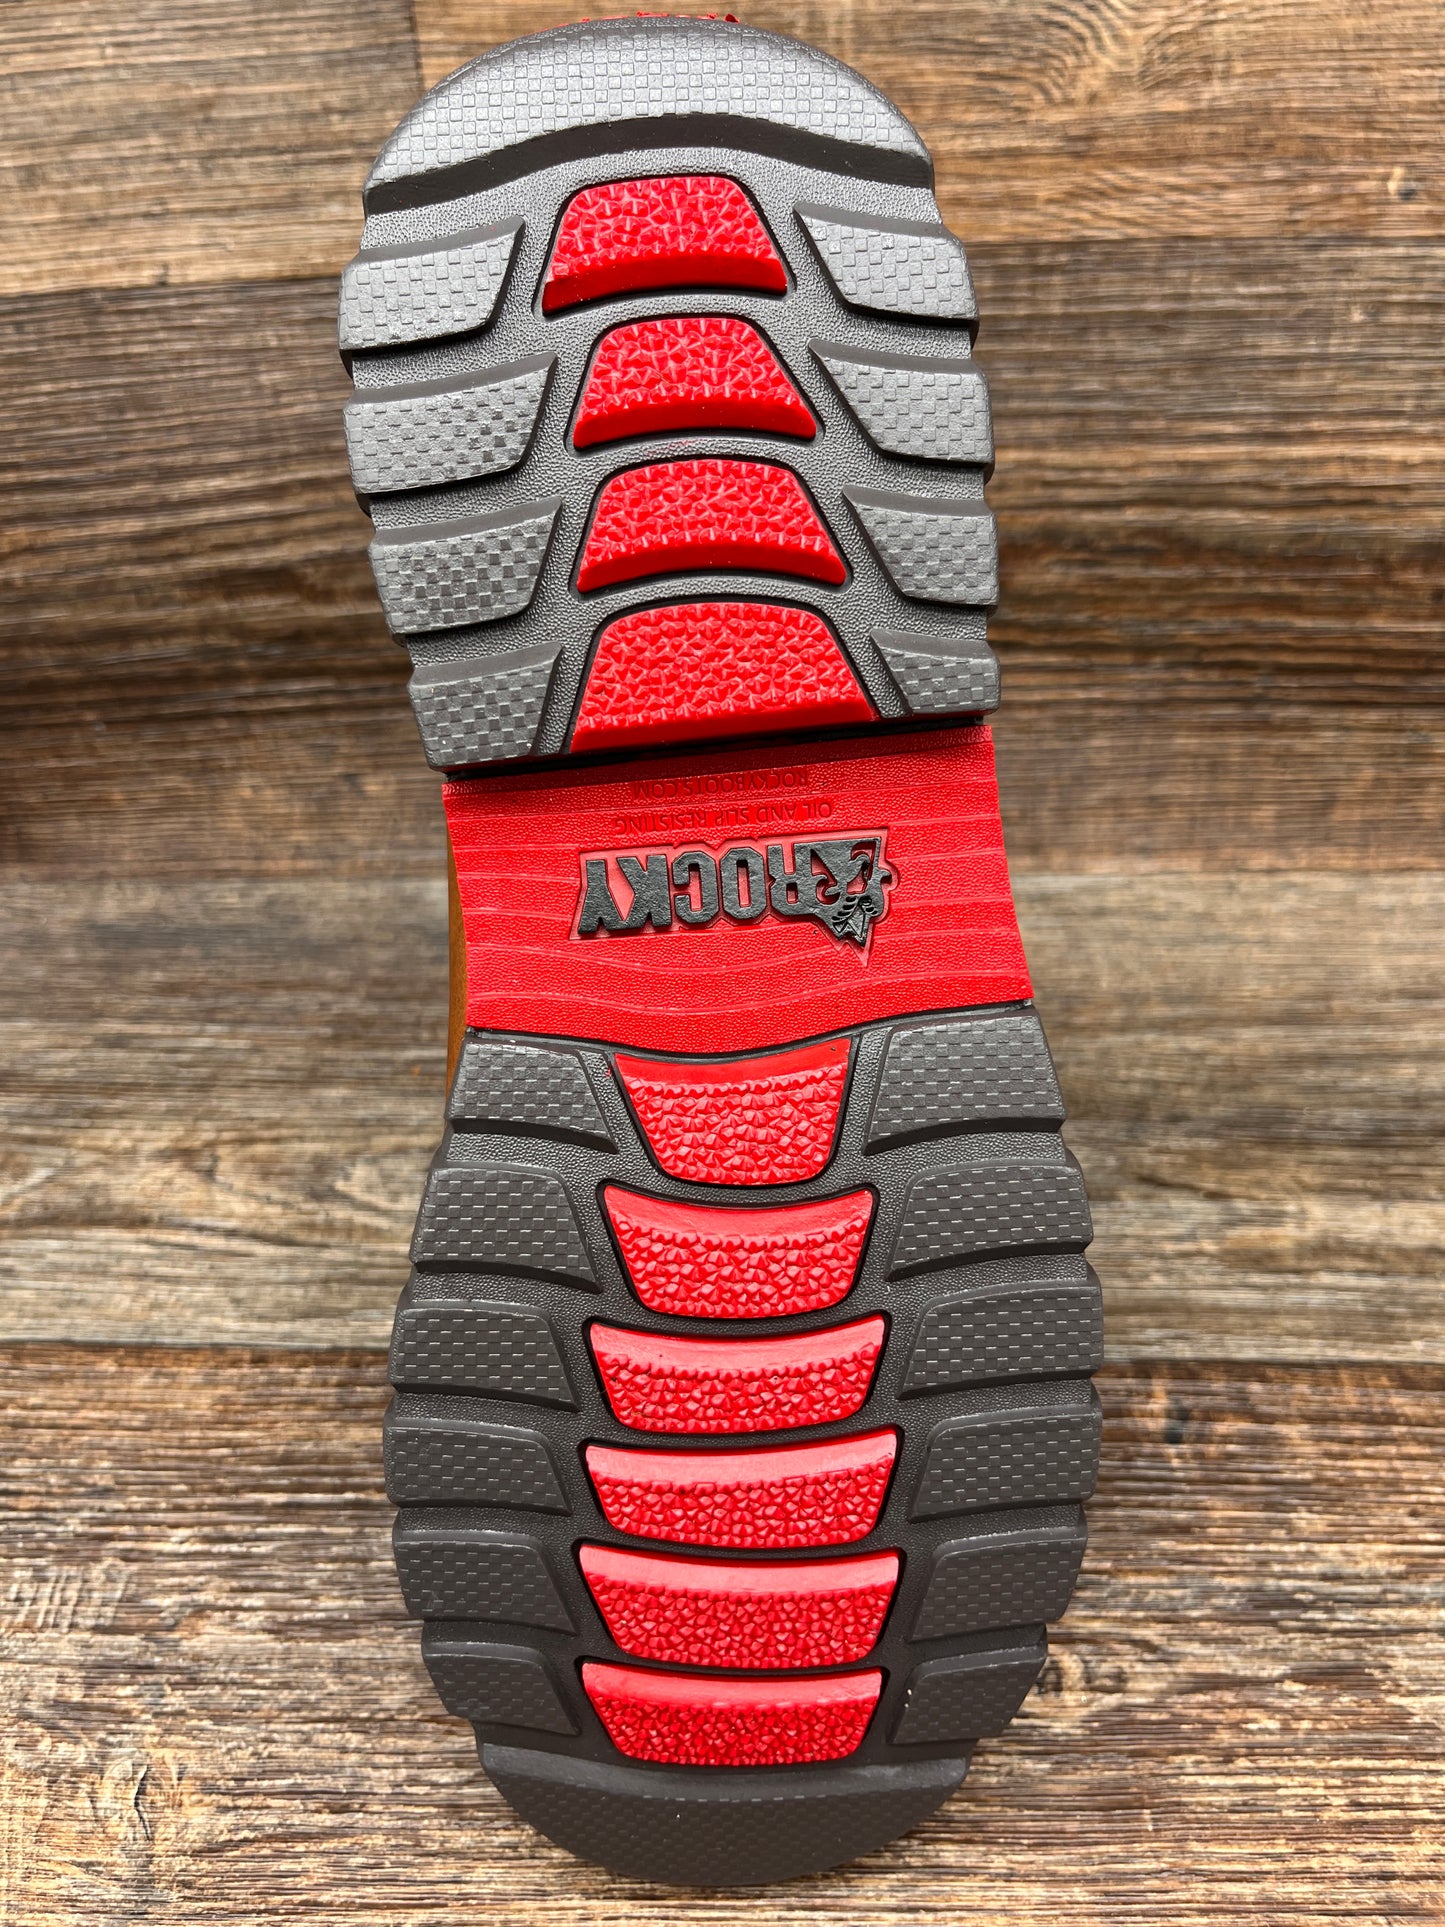 rkk0402 Men's USA Made Waterproof Composite Toe Slip On Work Boot by Rocky